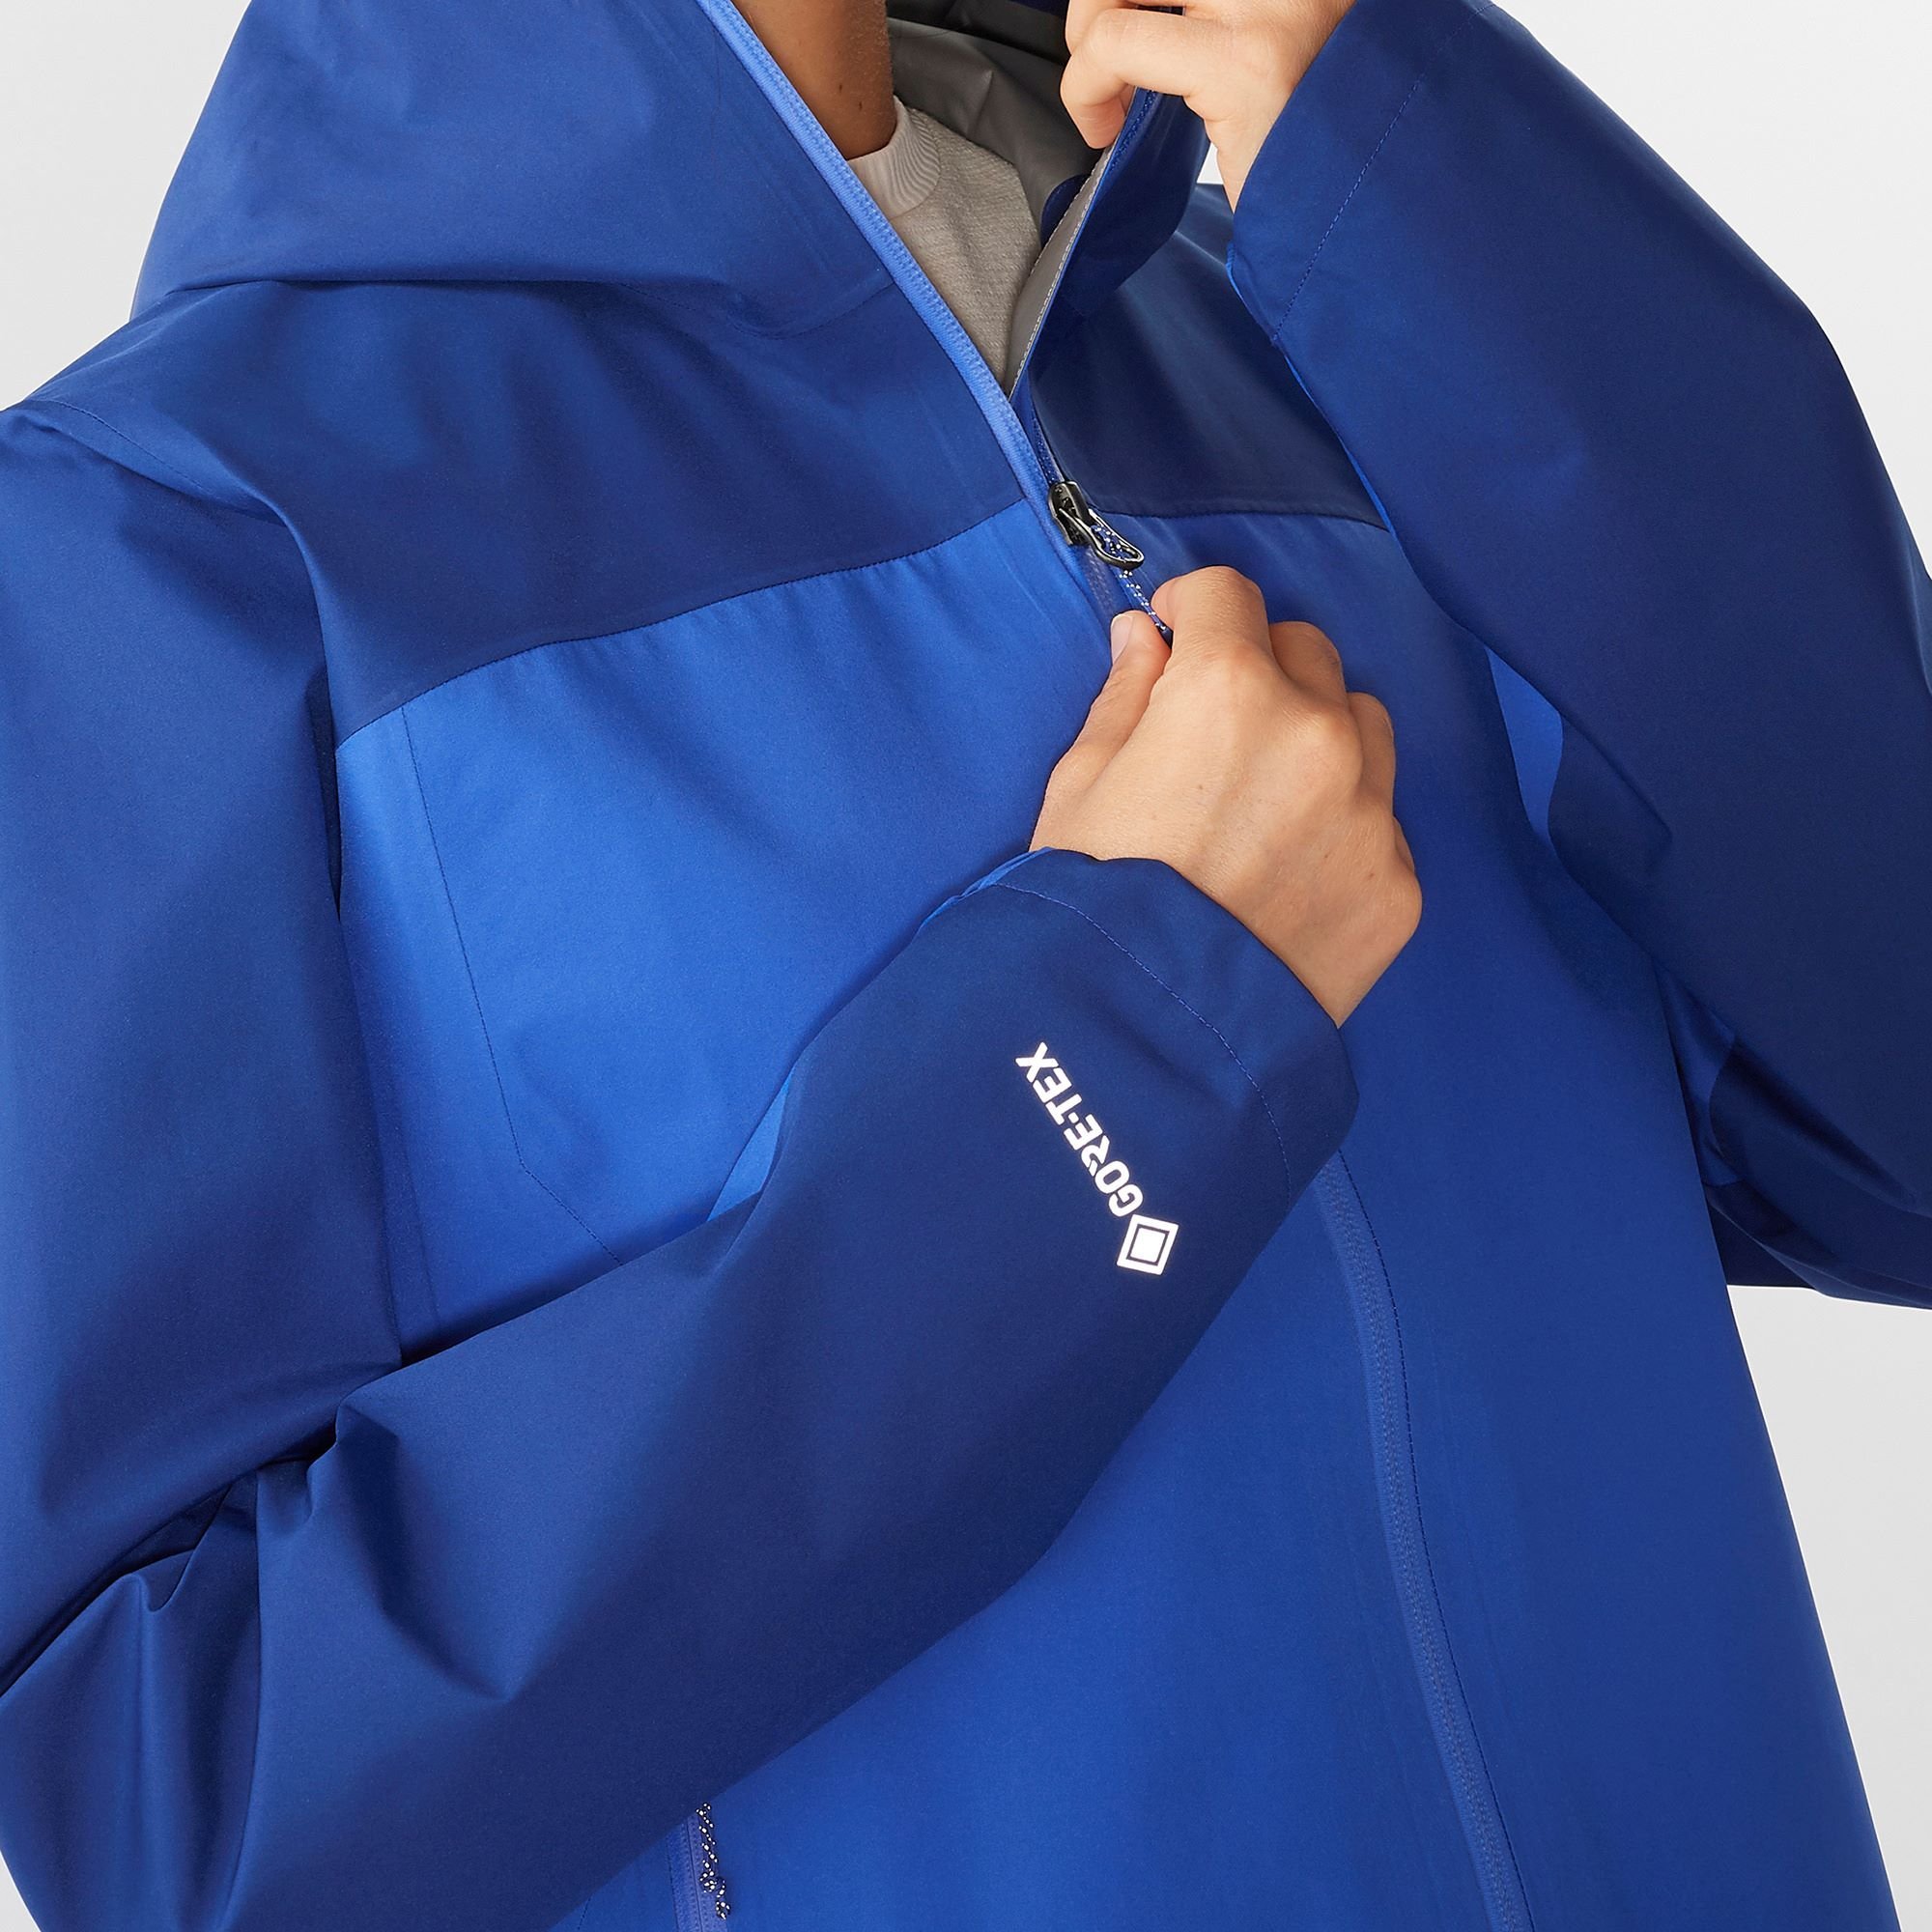 Bunda Salomon Outline GTX® 2.5L Jkt W Jacket - modrá